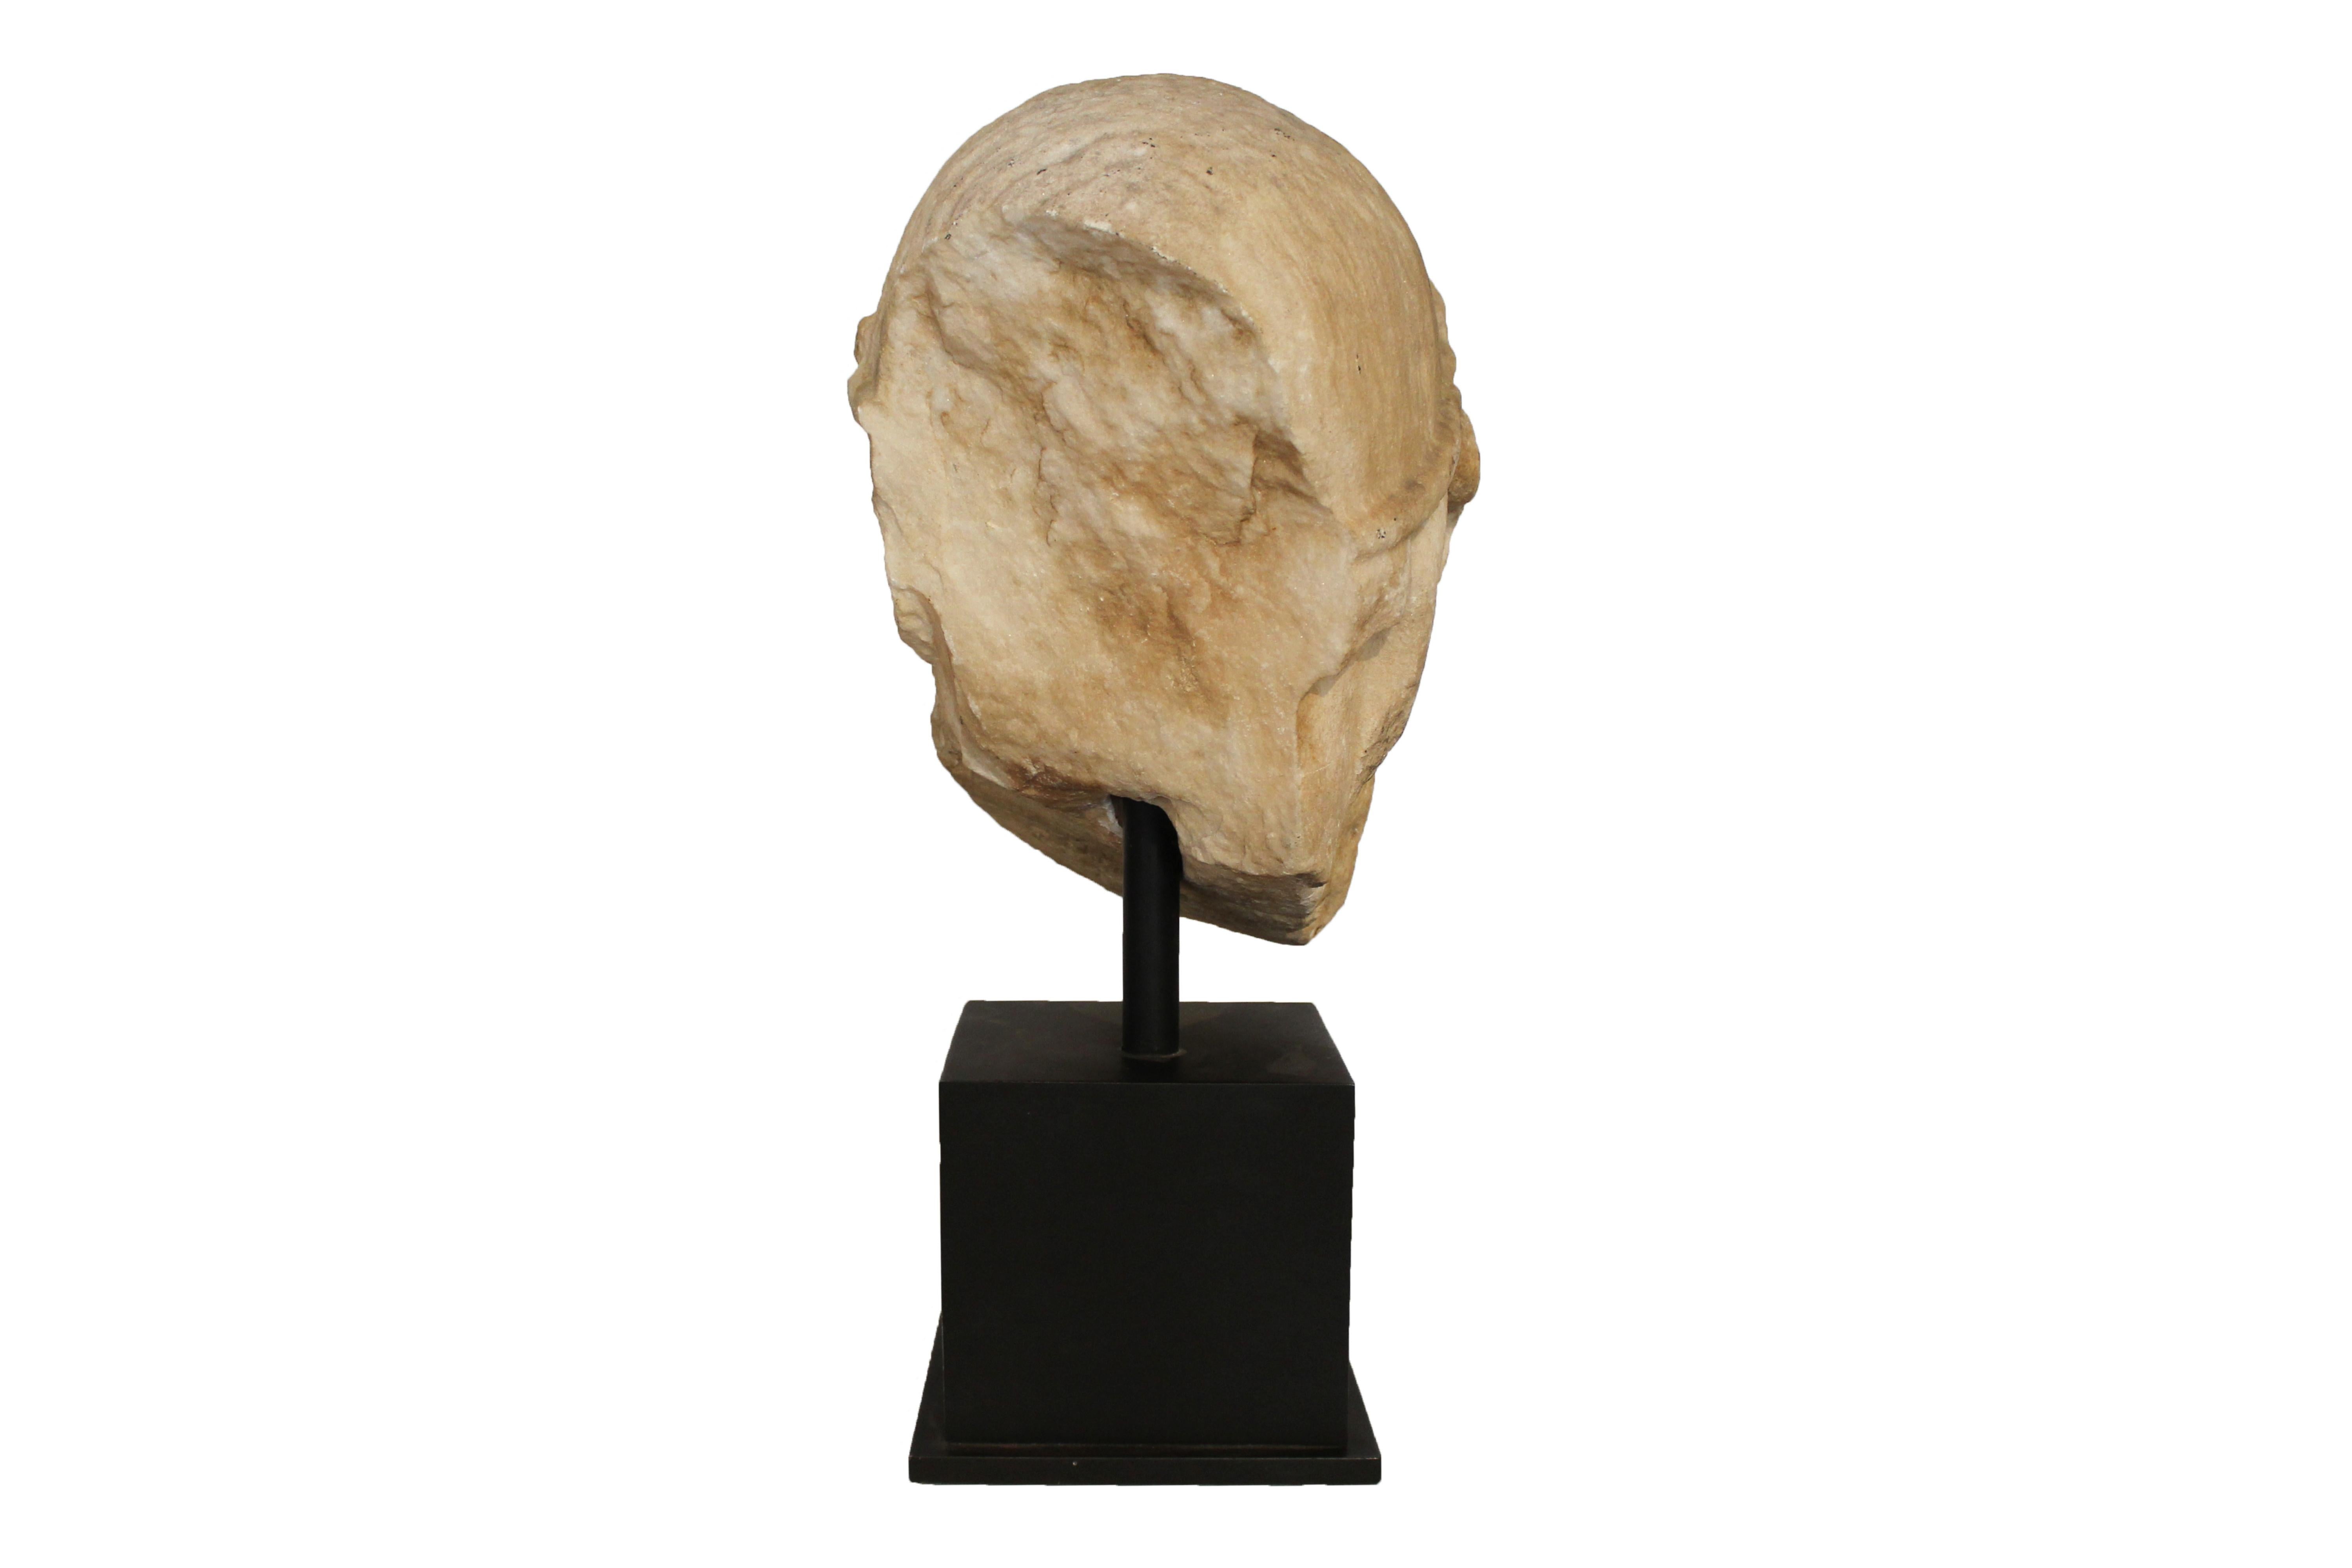 hermes statue head